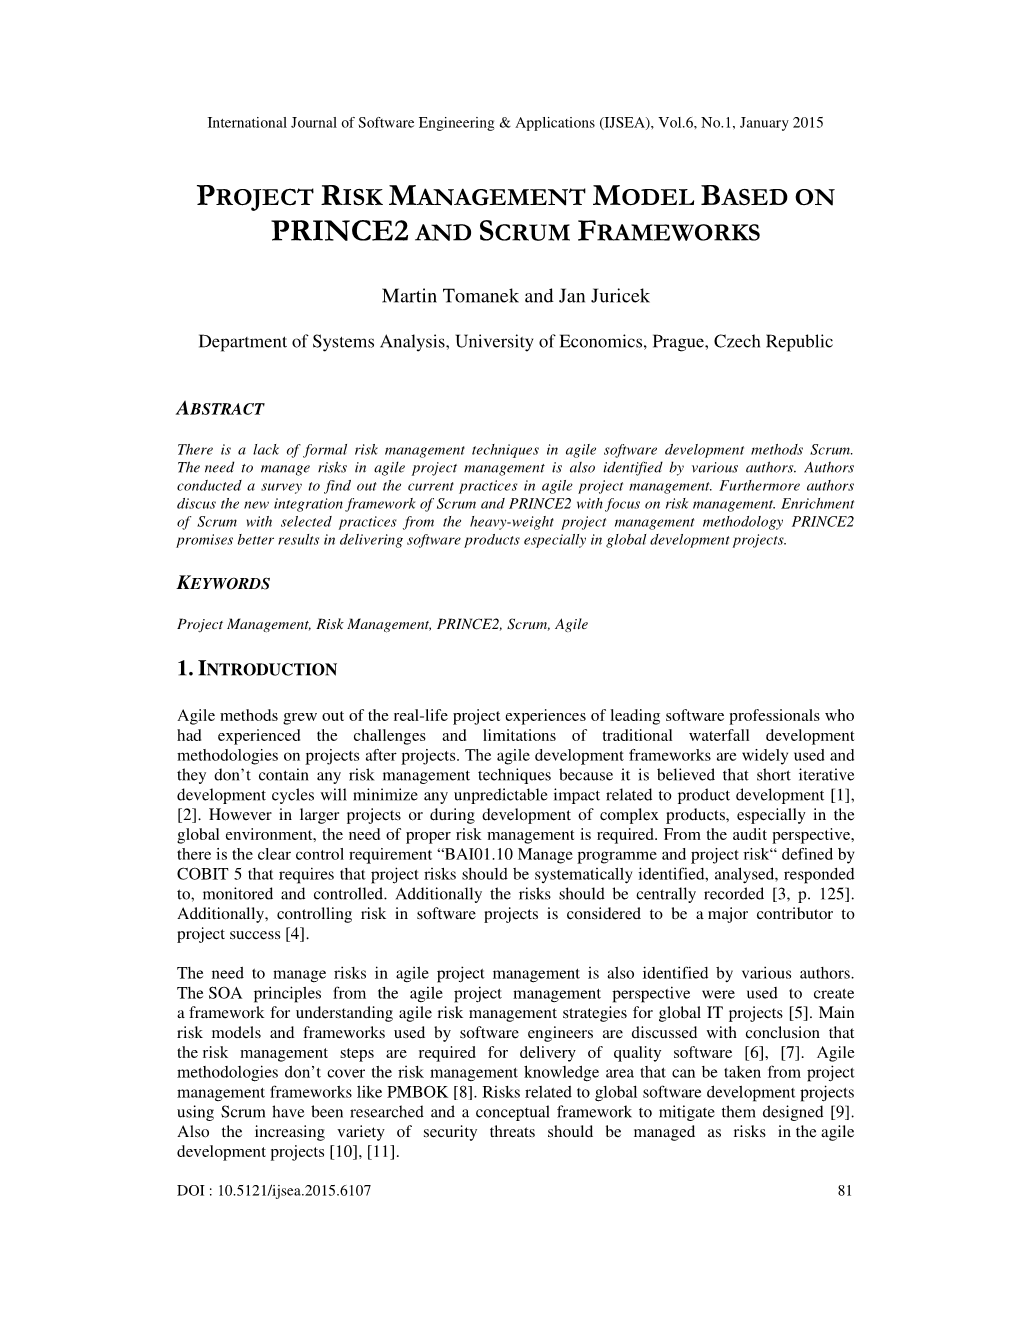 Project Risk Management Model Based on Prince2 and Scrum Frameworks